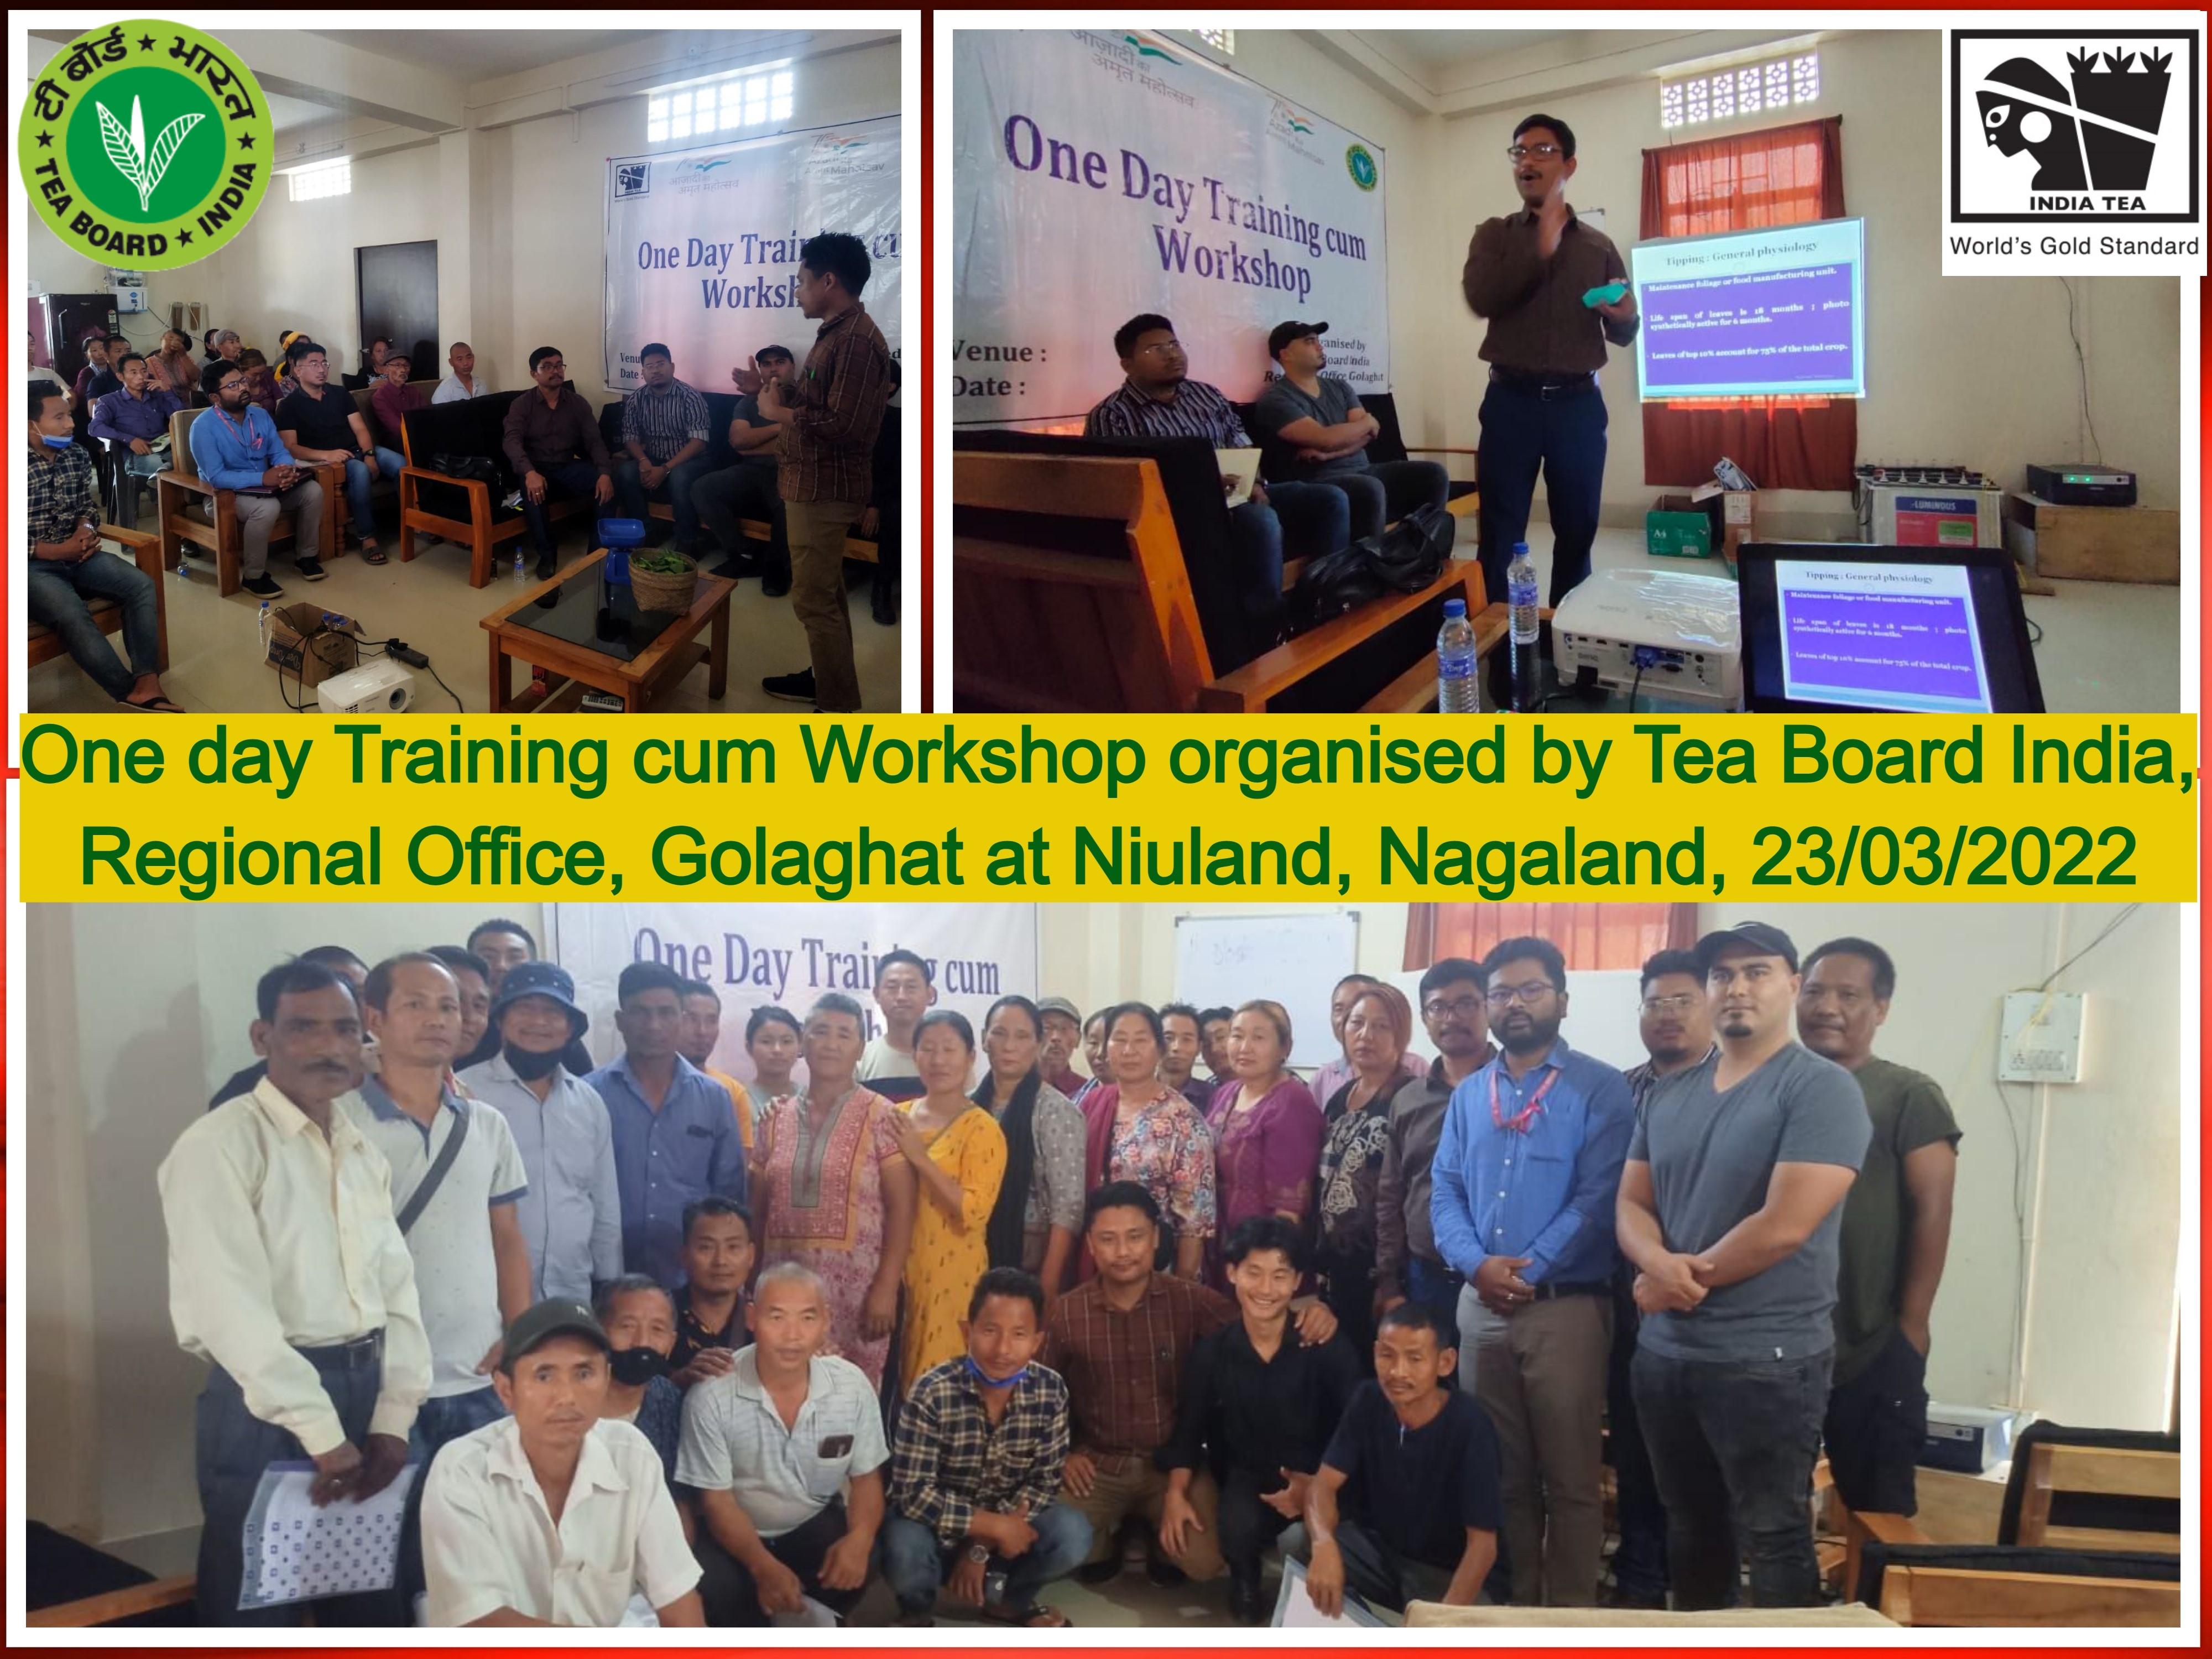 One day Training cum Workshop organised by Tea Board India, Regional Office, Golaghat at Niuland, Nagaland, 23/03/2022